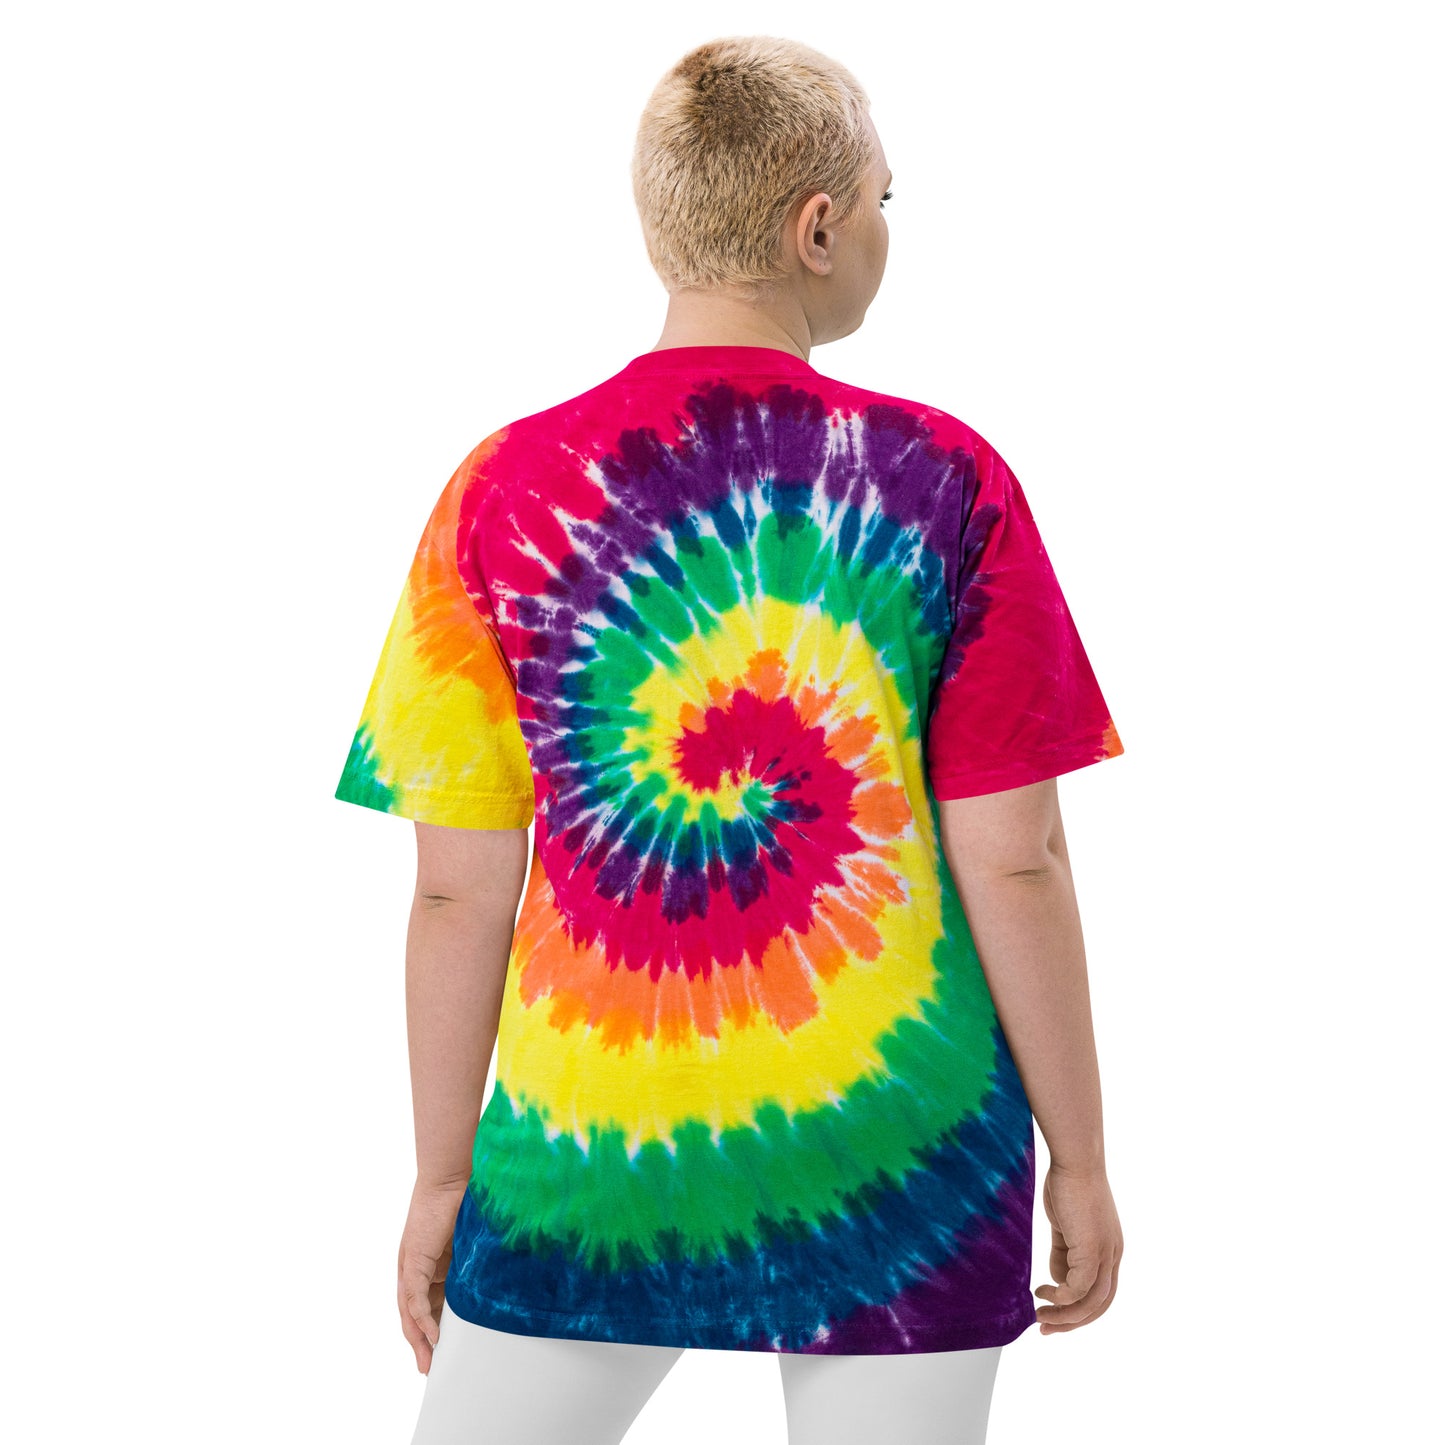 Tie Dye T-Shirt: Classic Rainbow (Glamourange Oversized Tie-Dye T-Shirts)